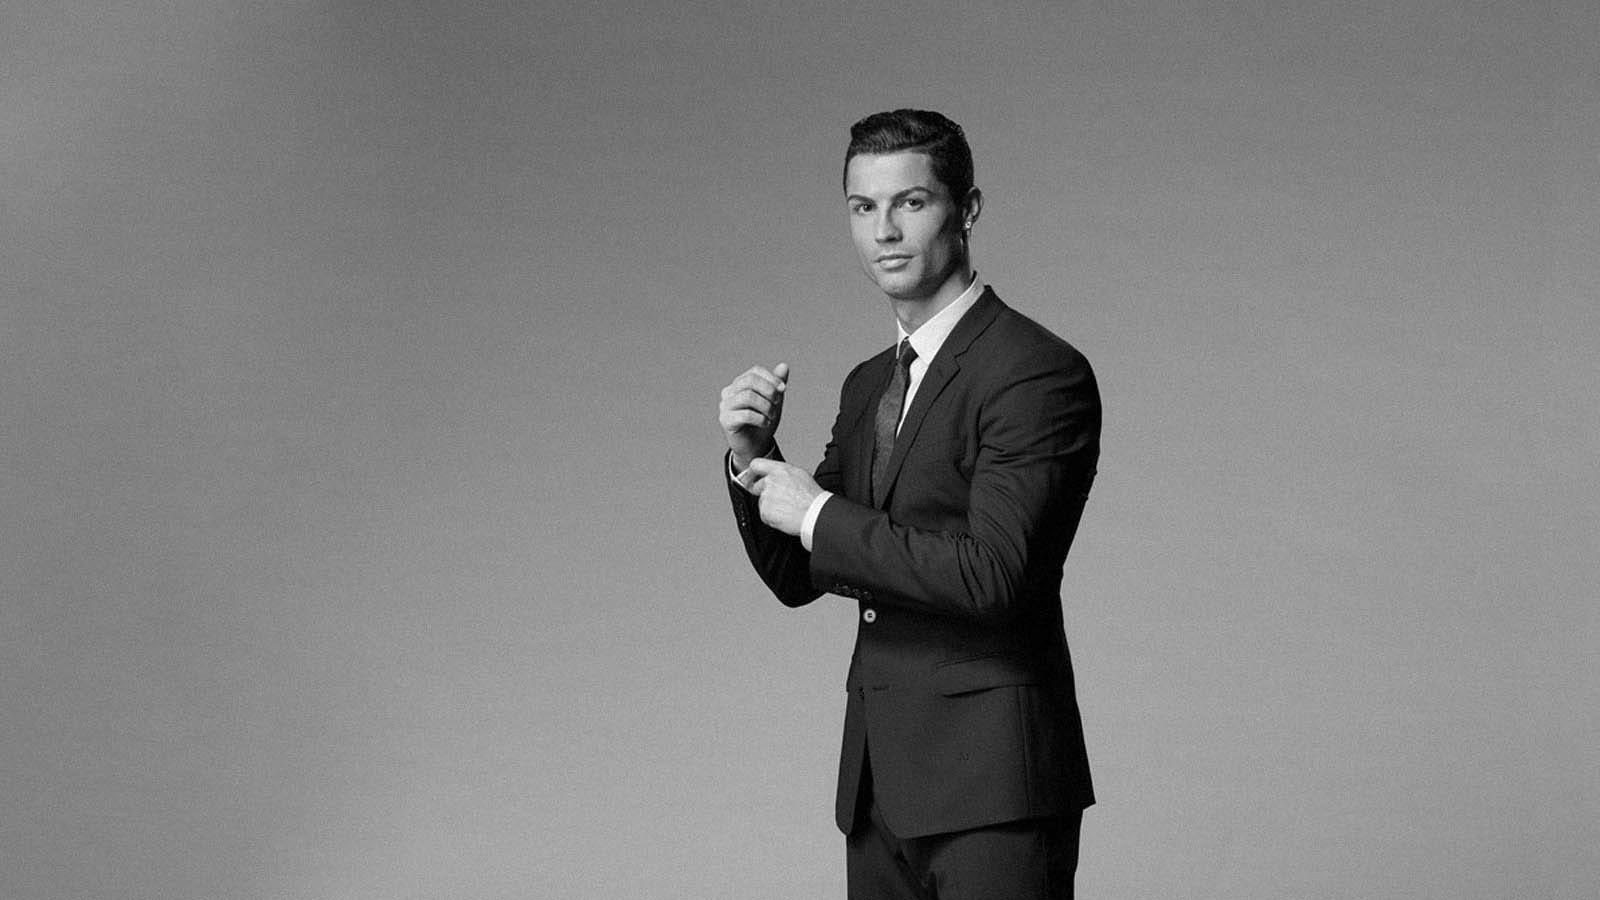 Football player Cristiano Ronaldo's collaboration with fashion designer  Richard Chai